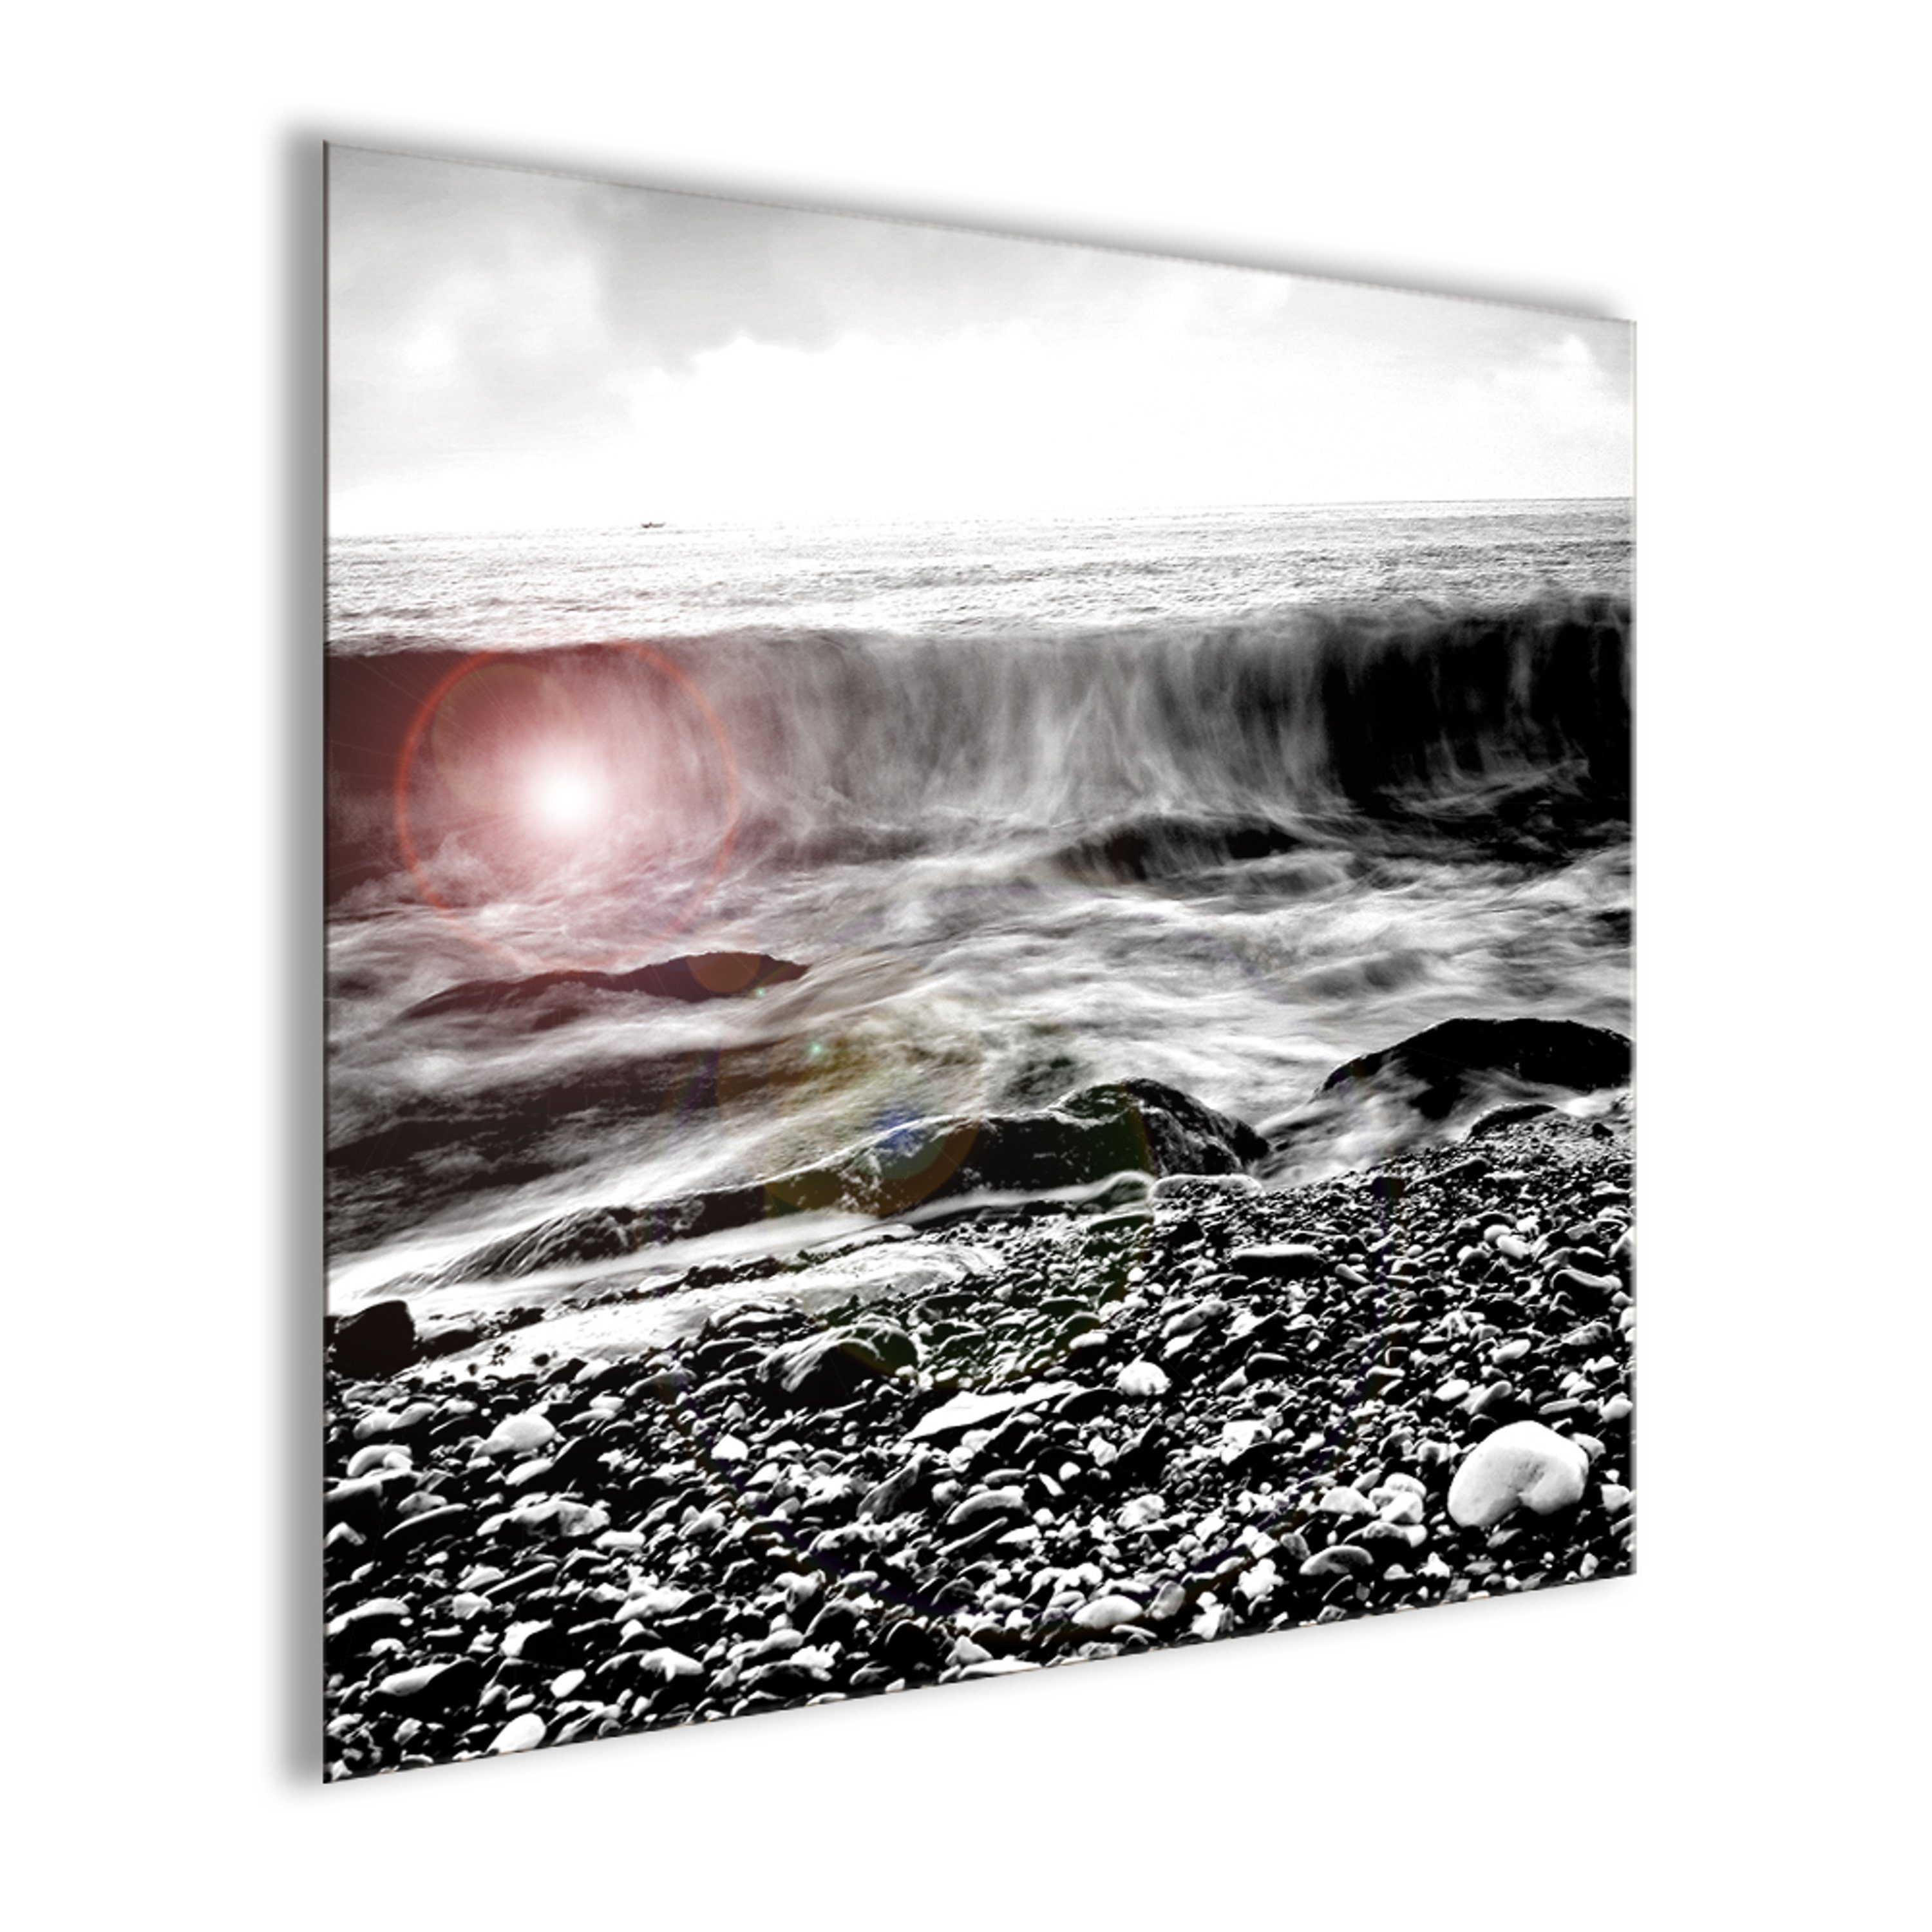 Foto: 30x30cm artissimo Fotografie, Strand schwarz-weiß Glasbild Glasbild Meer Strand schwarz-weiß